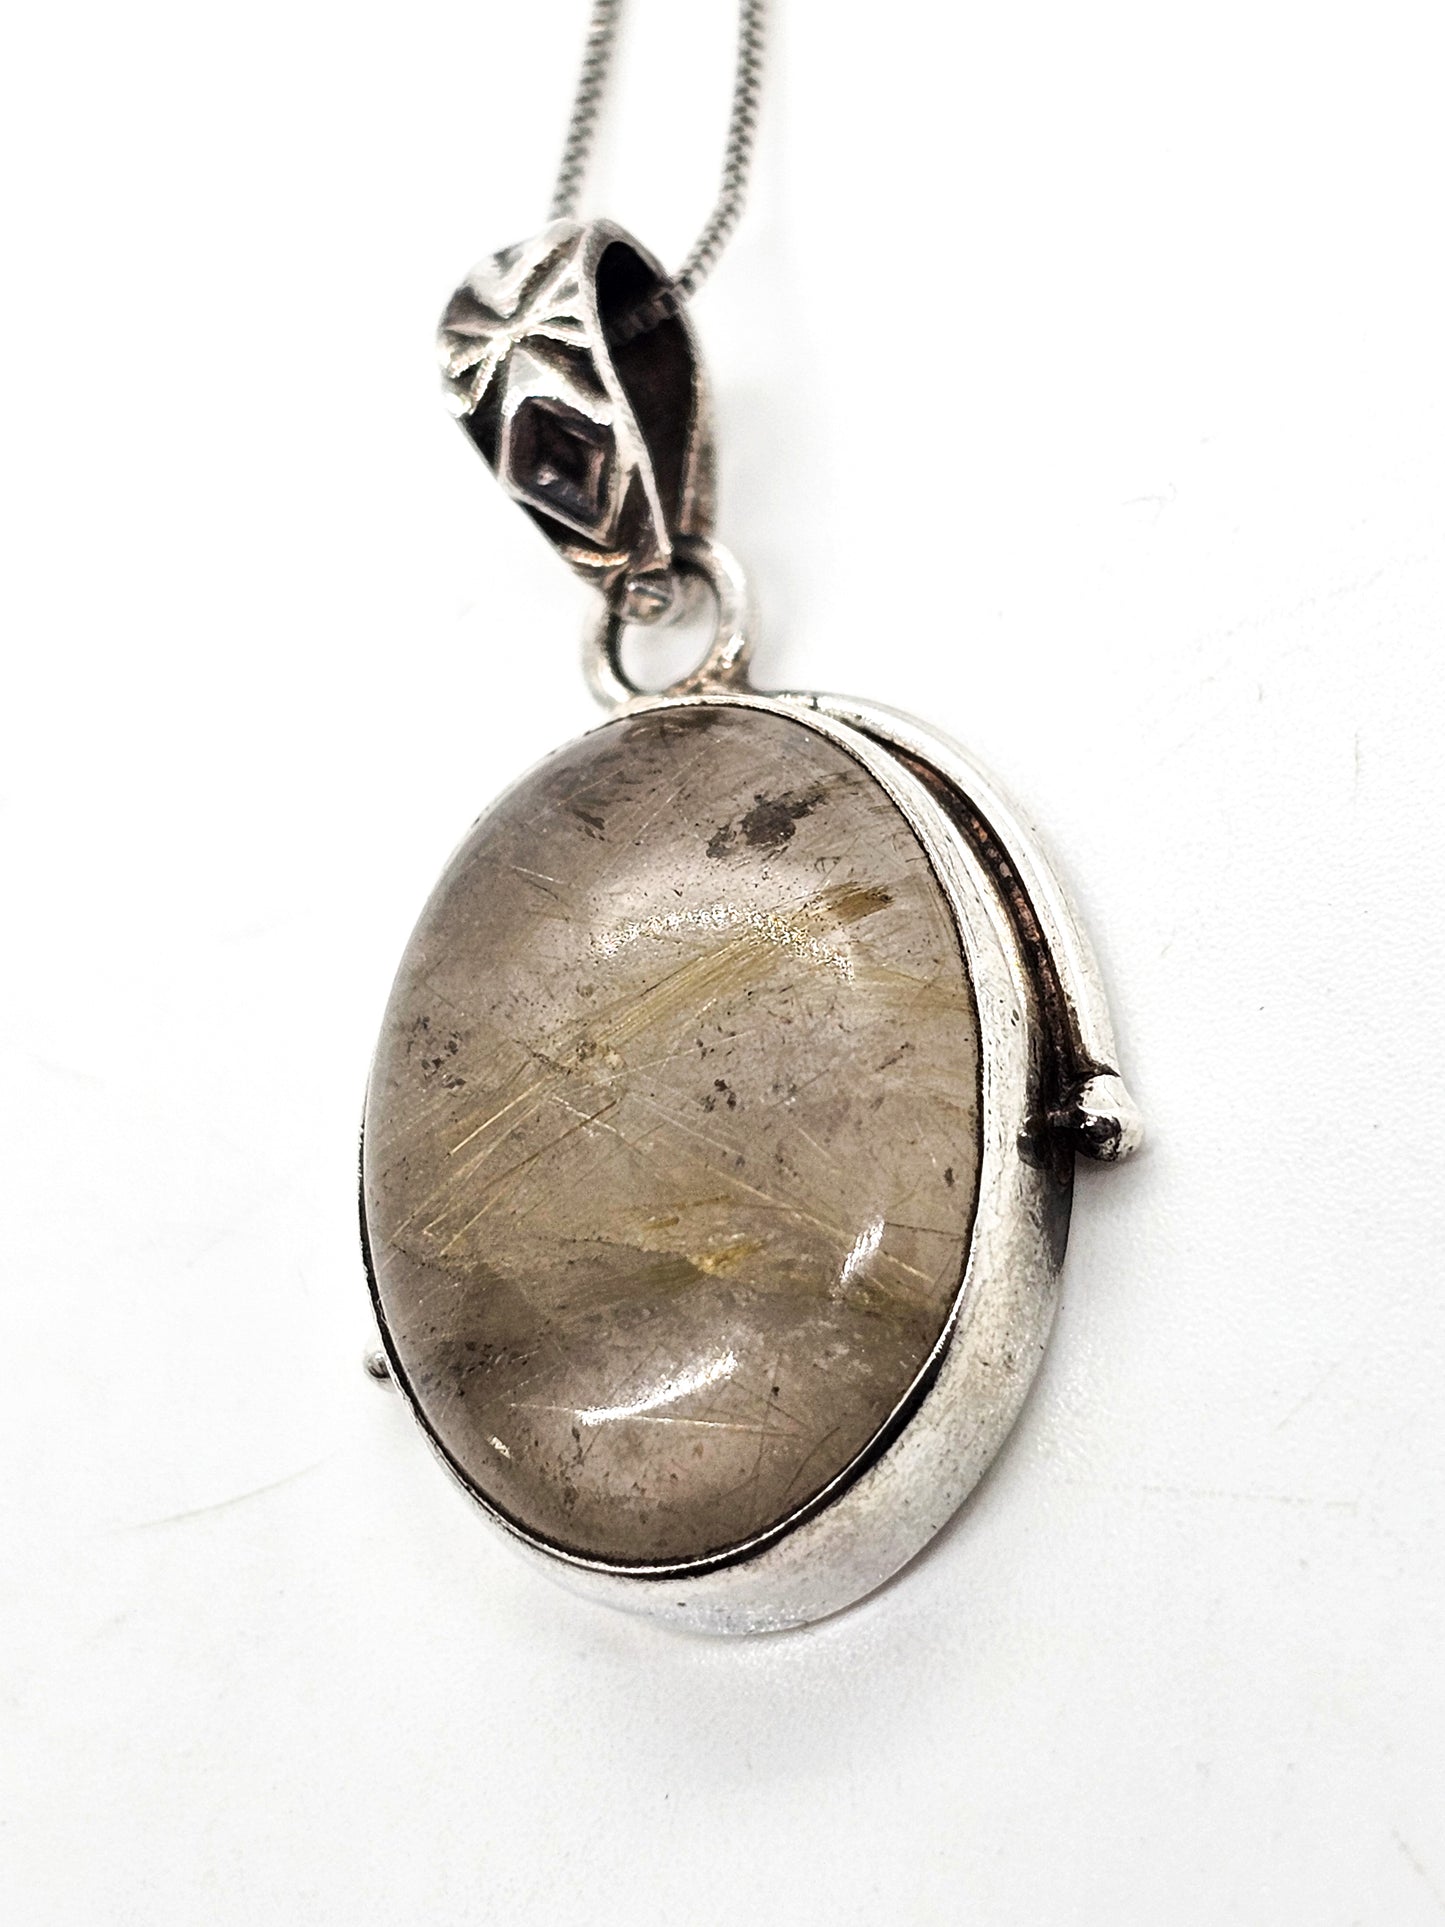 Golden Rutile Rutilated Quartz gemstone sterling silver pendant necklace